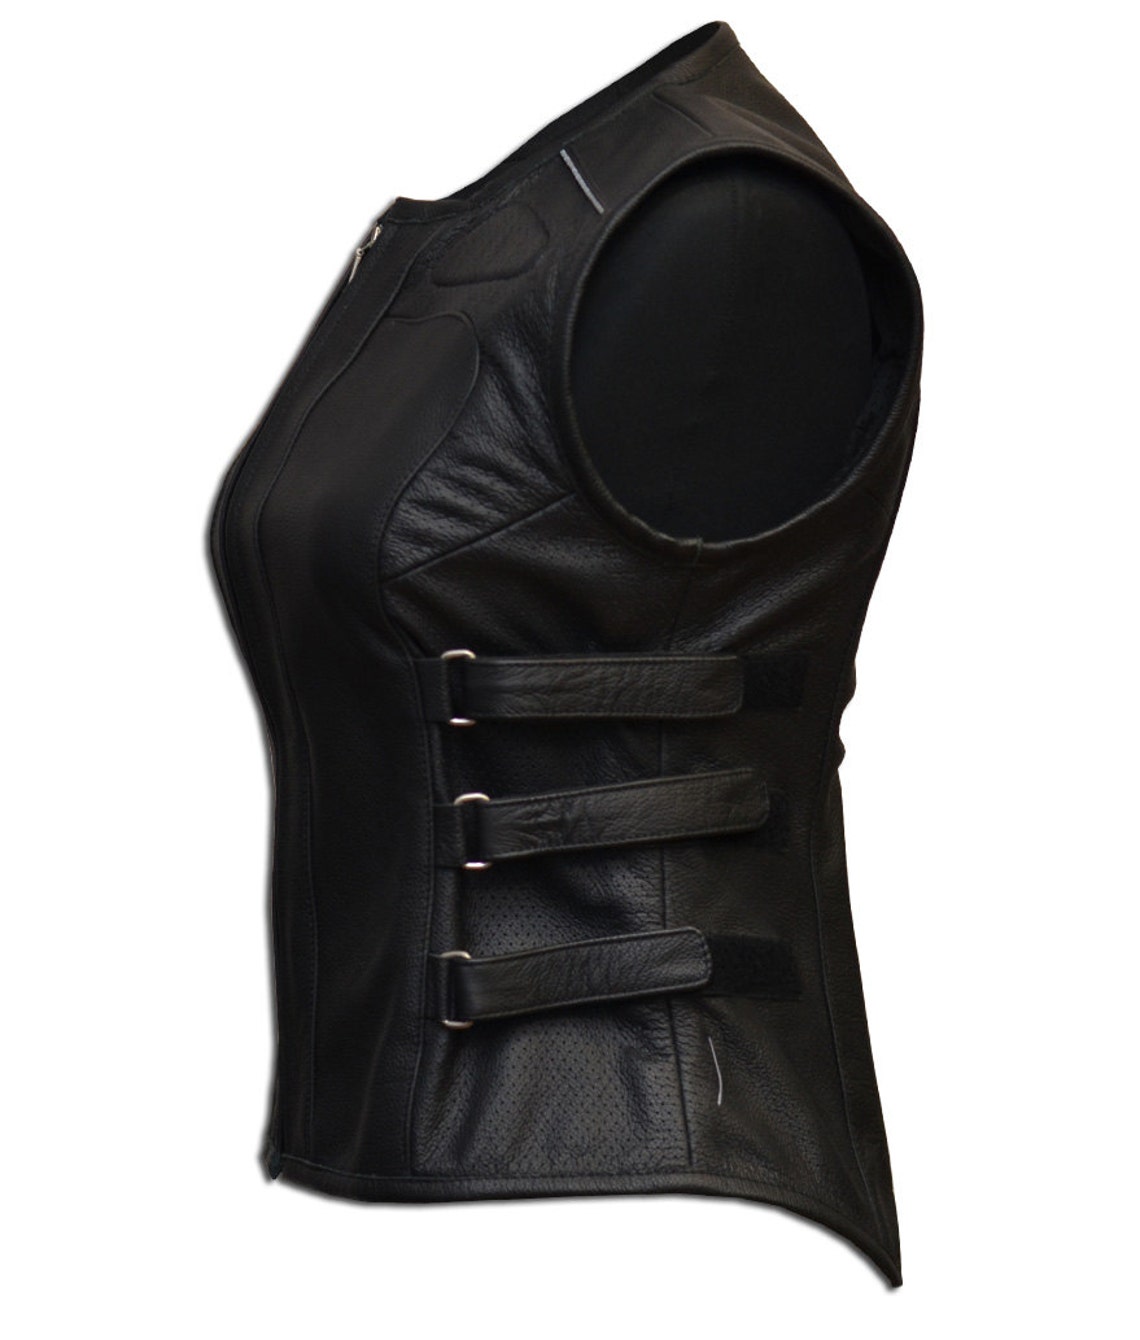 Leather vest women motorcycle leather vest Biker leather | Etsy